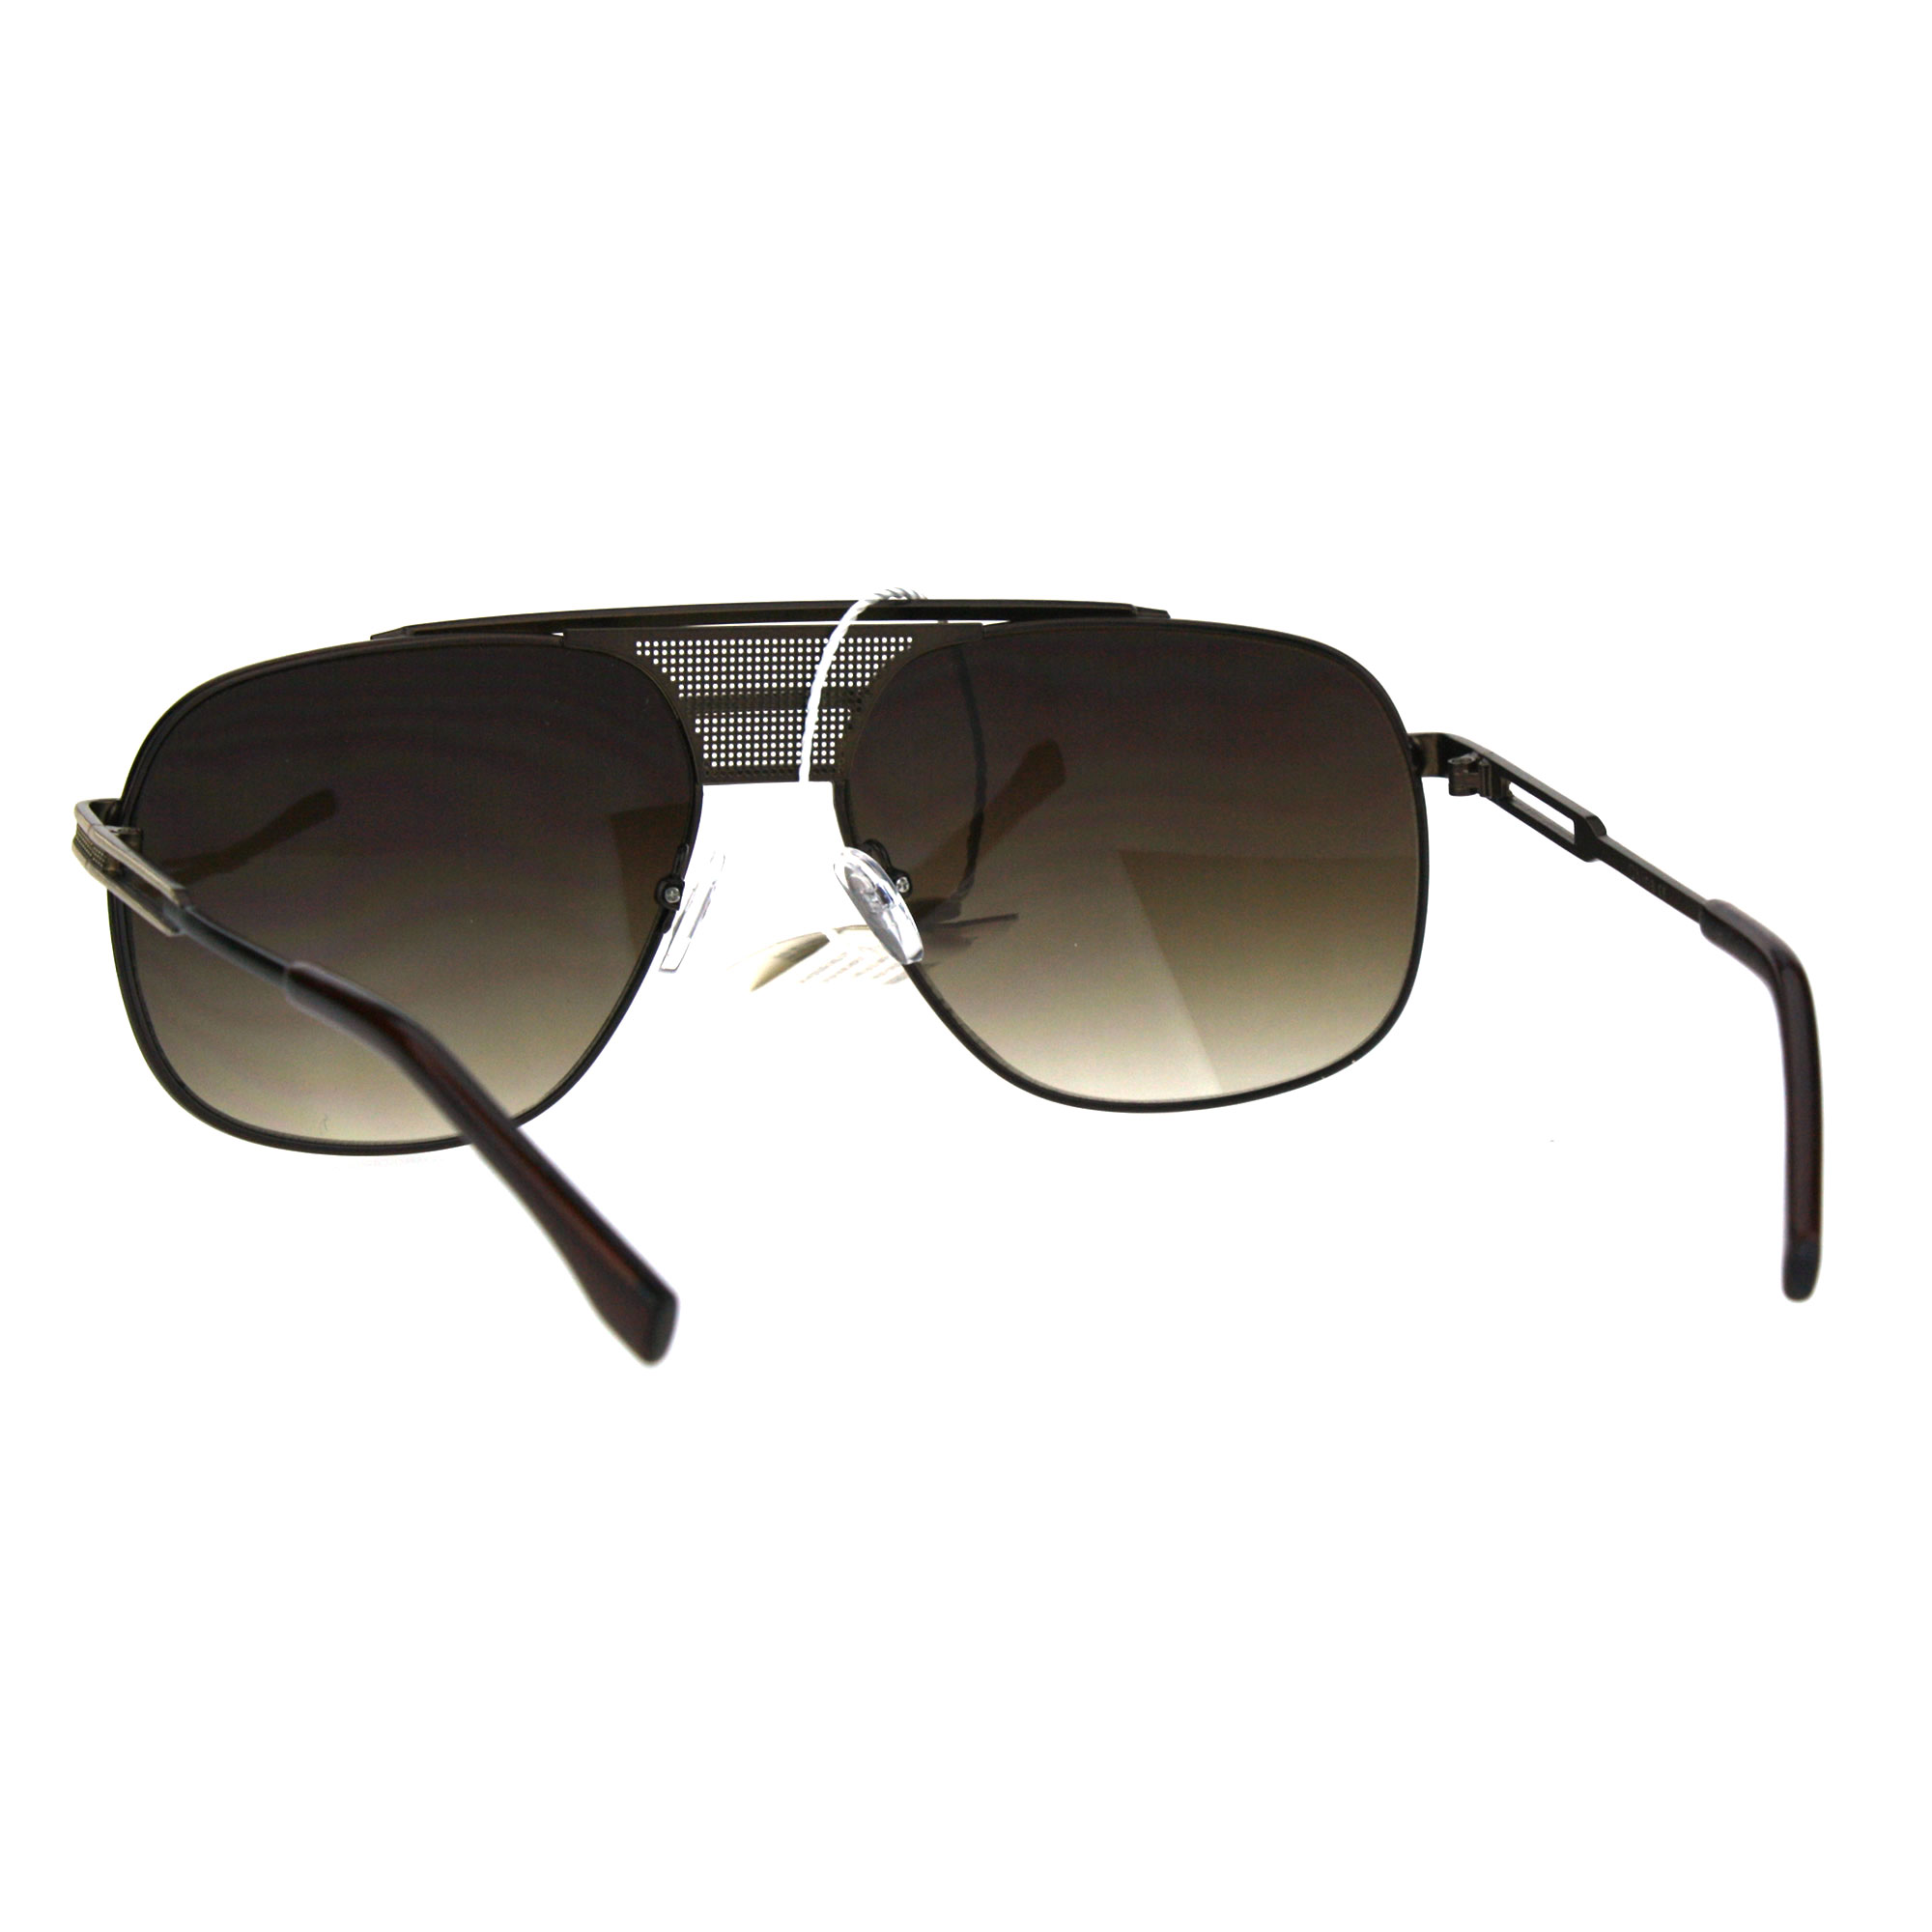 Mens Oversize Retro Style Fashion Mobster Sunglasses | eBay